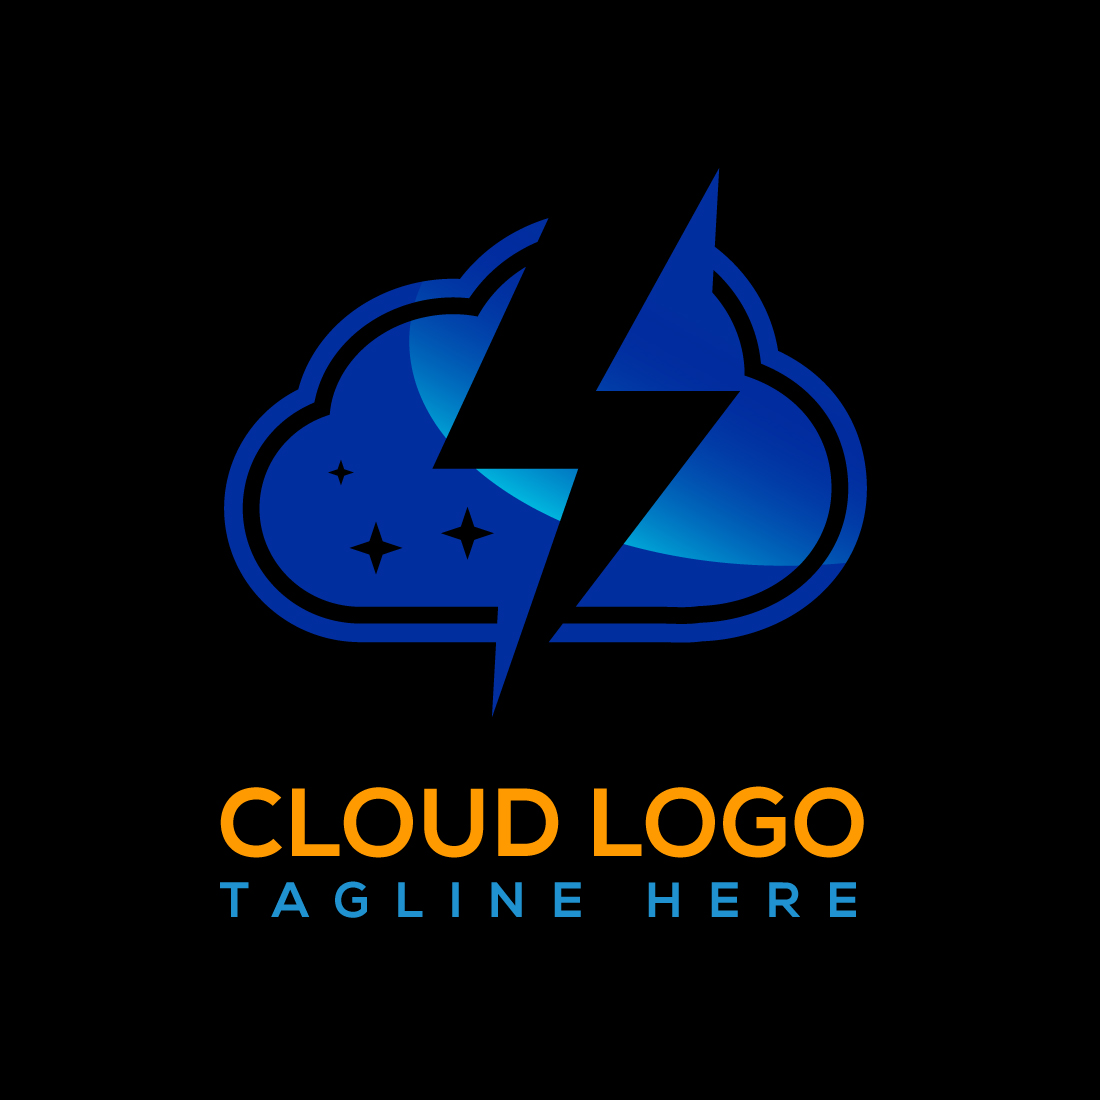 Provider Service Cloud Logo Design cover image.